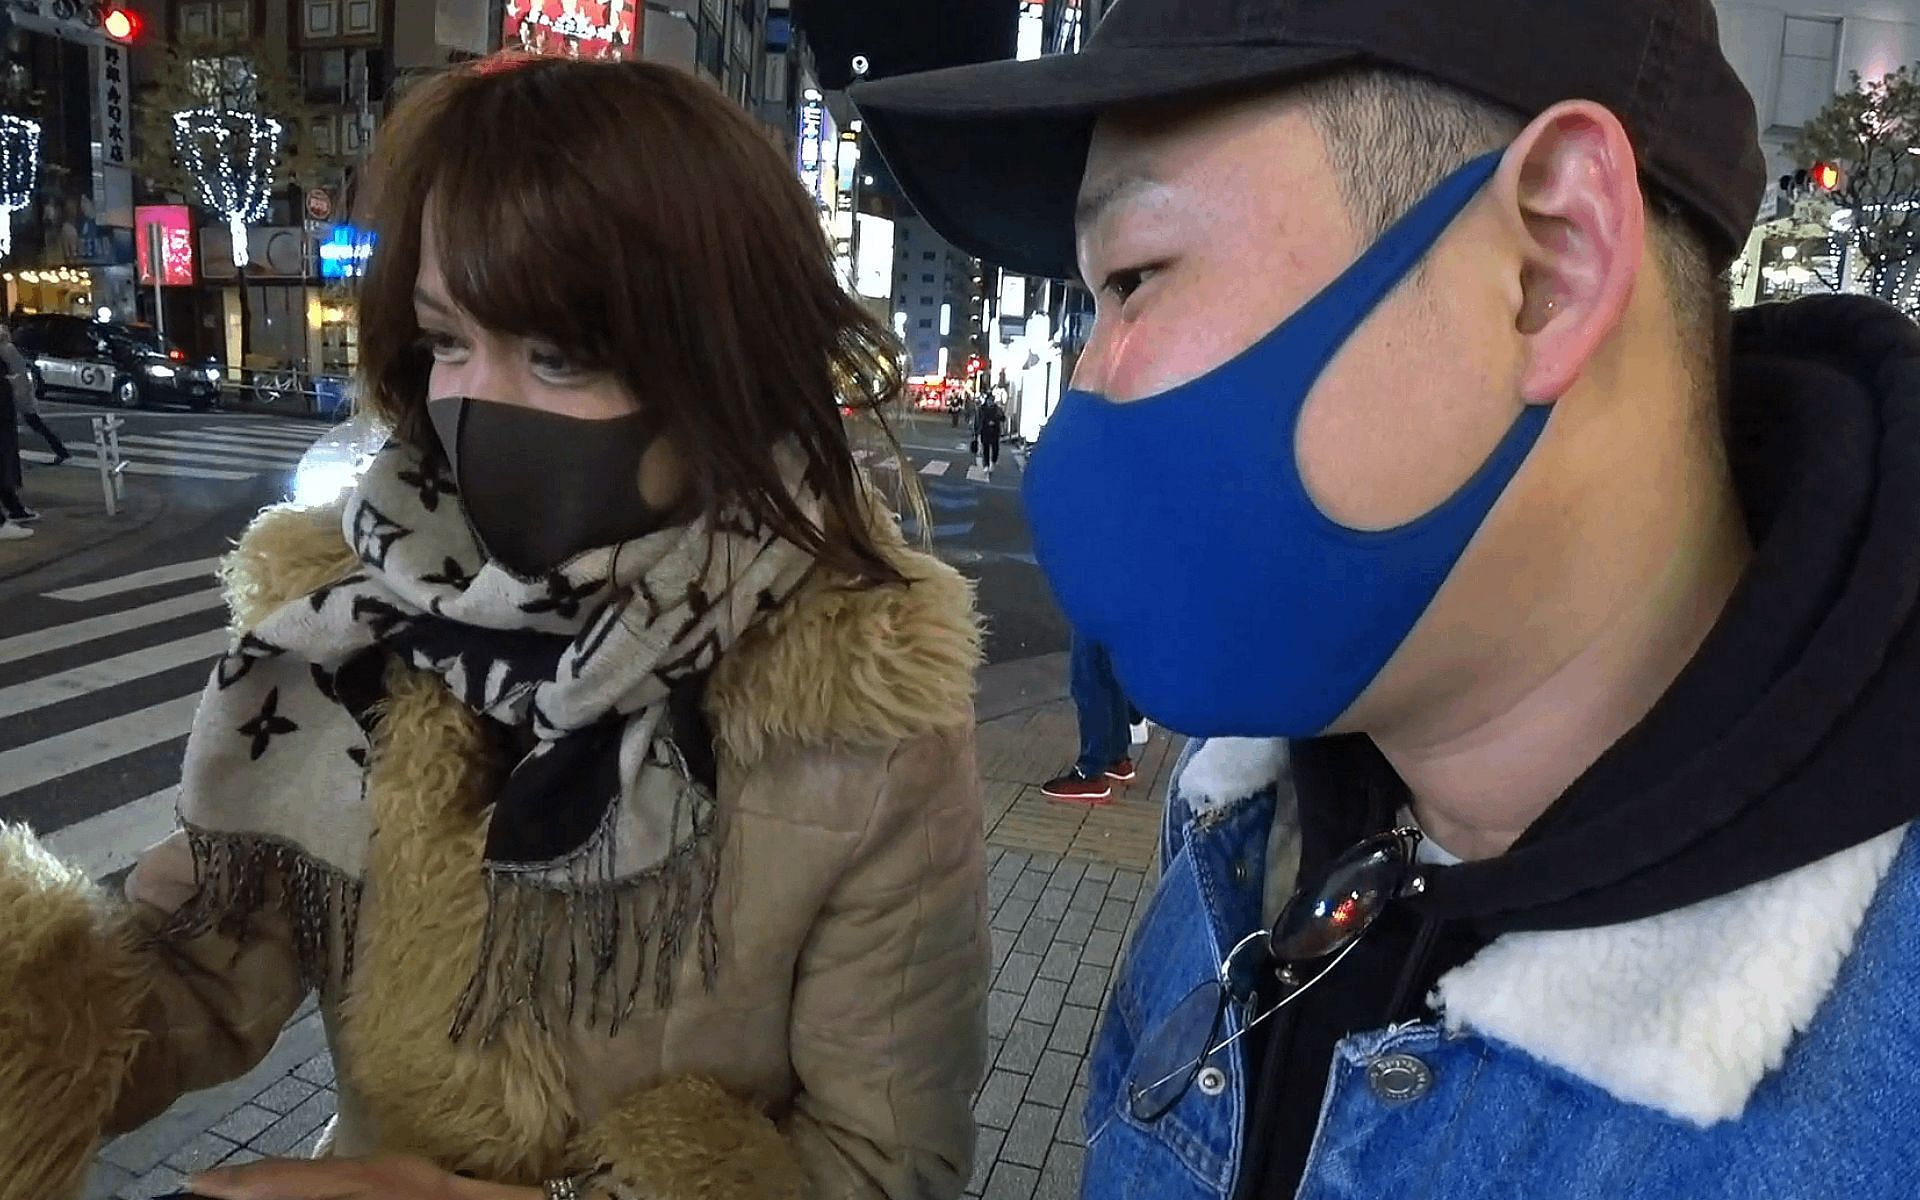 hyubsama compliments fellow streamer on her looks (Image via Twitch/hyubsama)